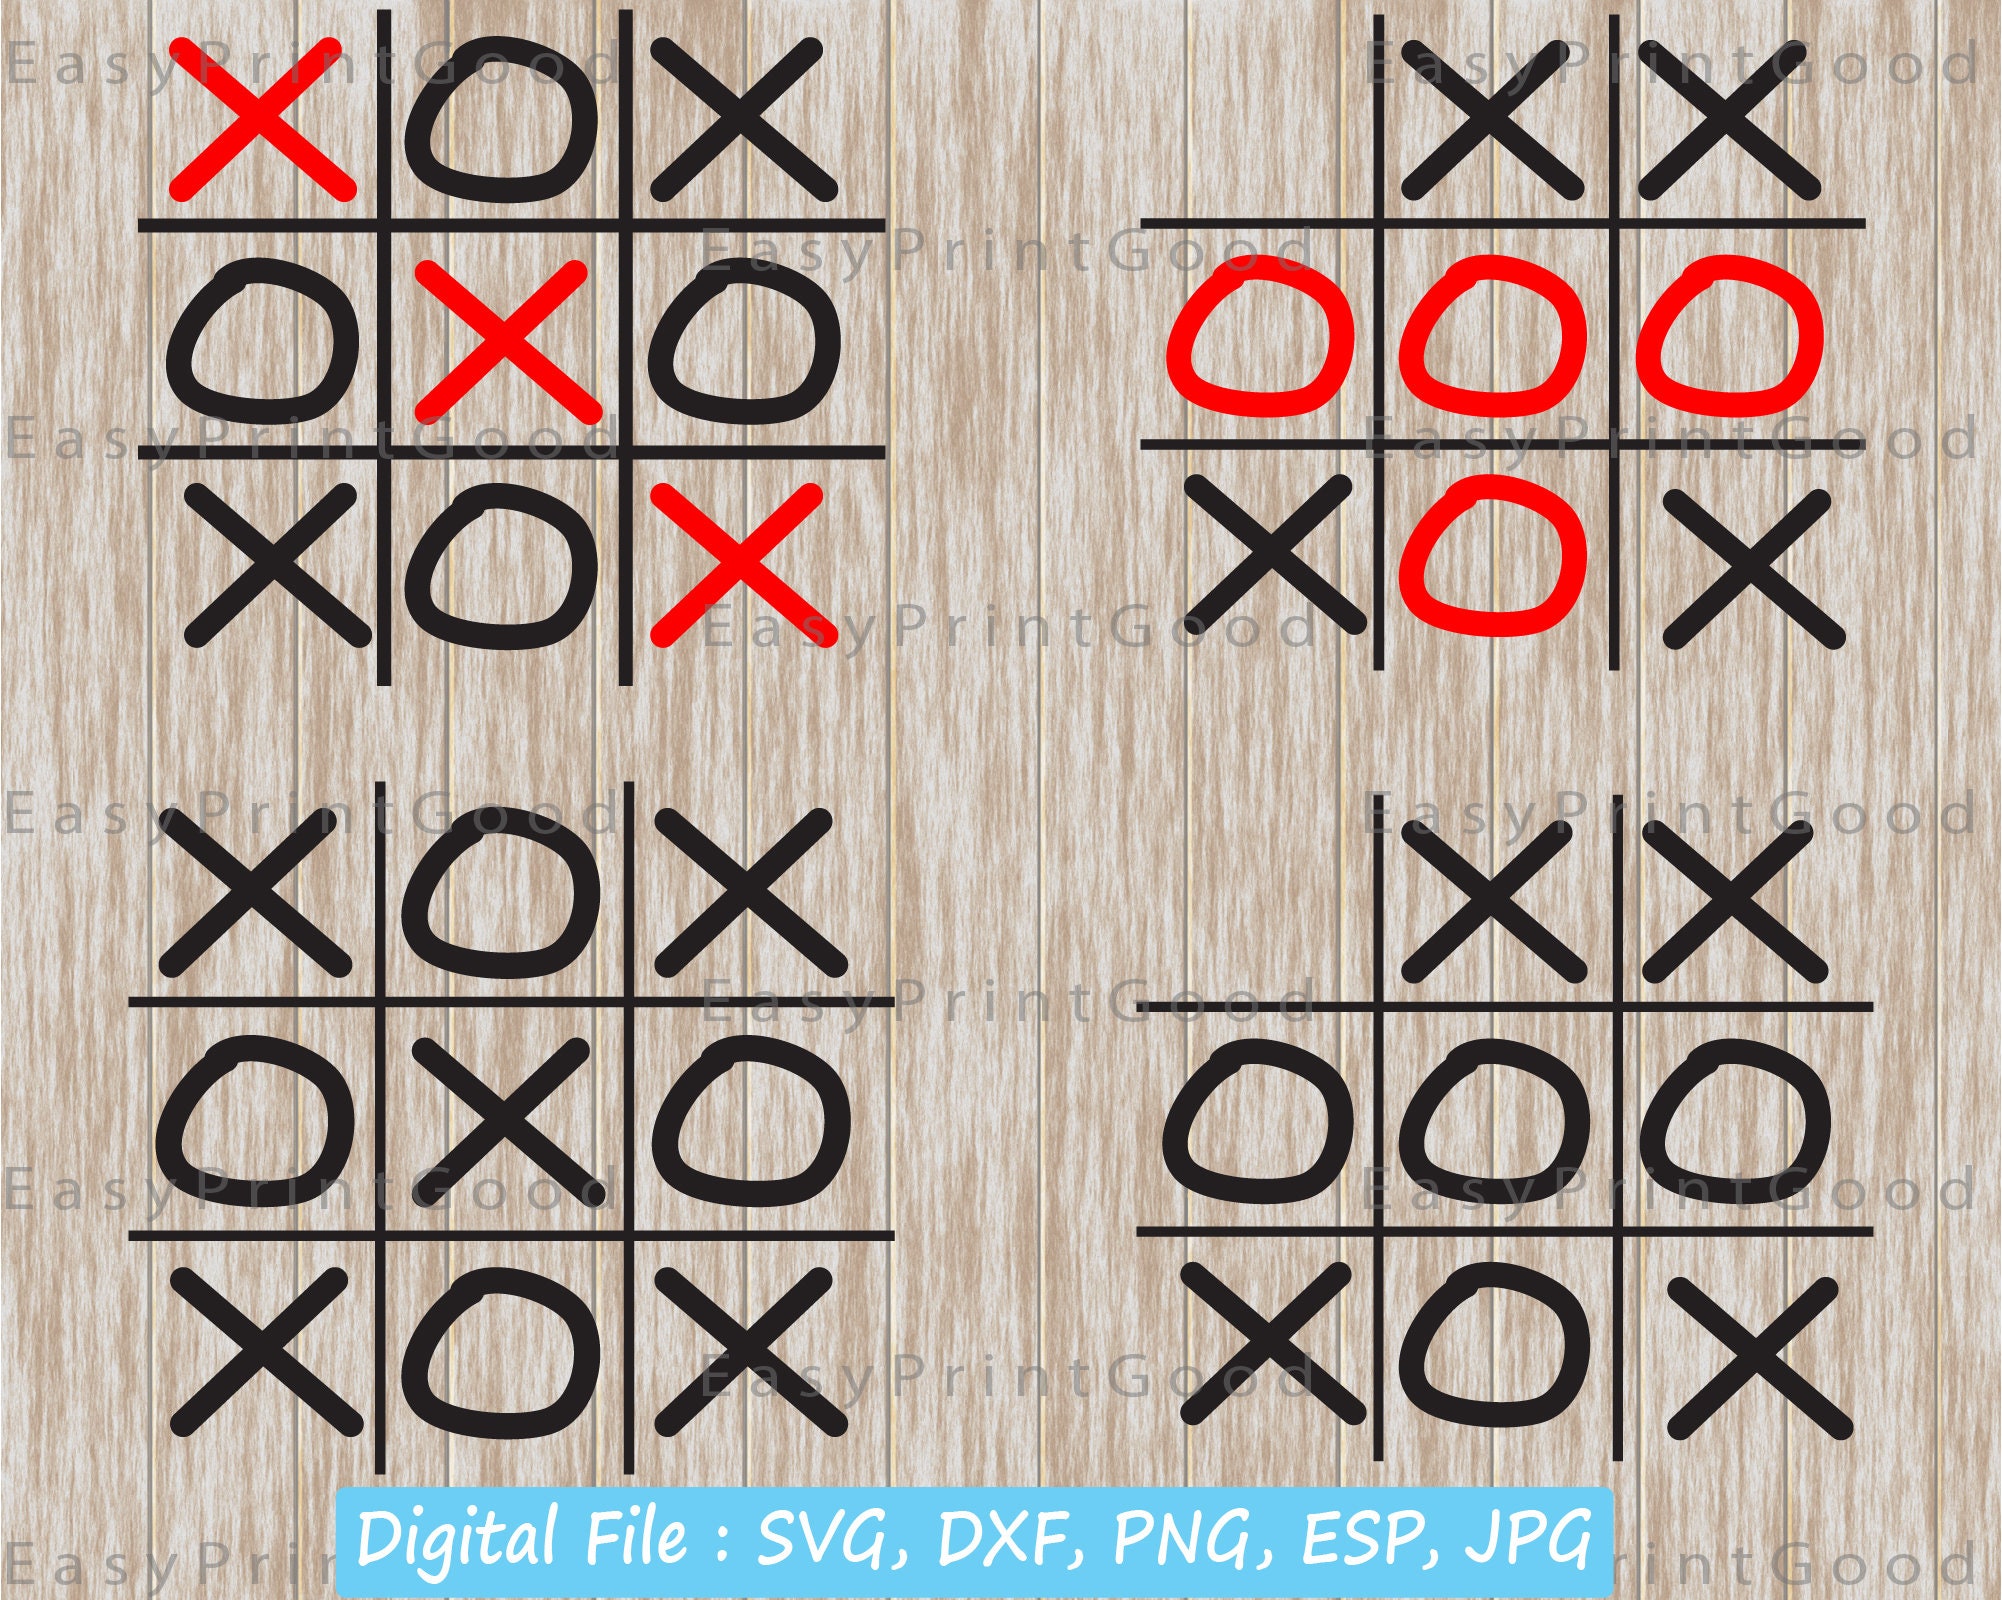 Tic Tac Toe SVG Tic Tac Toe Svg Files Tic Tac Toe Board Game -  Finland